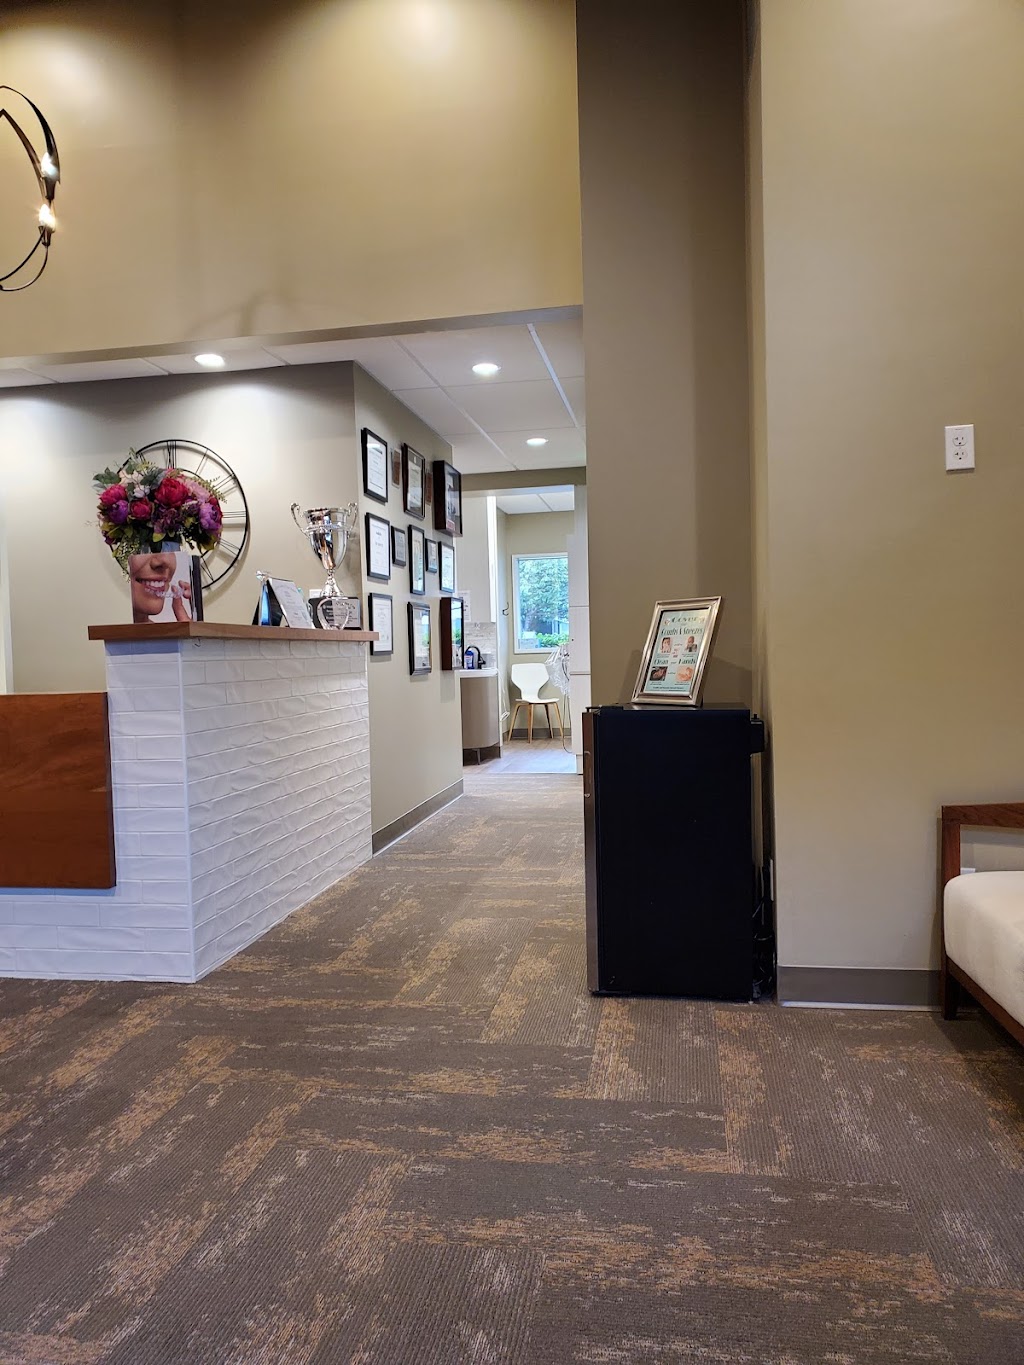 Great Northwest Dental | 1346 8th St NE Suite #100, Auburn, WA 98002, USA | Phone: (253) 833-6033